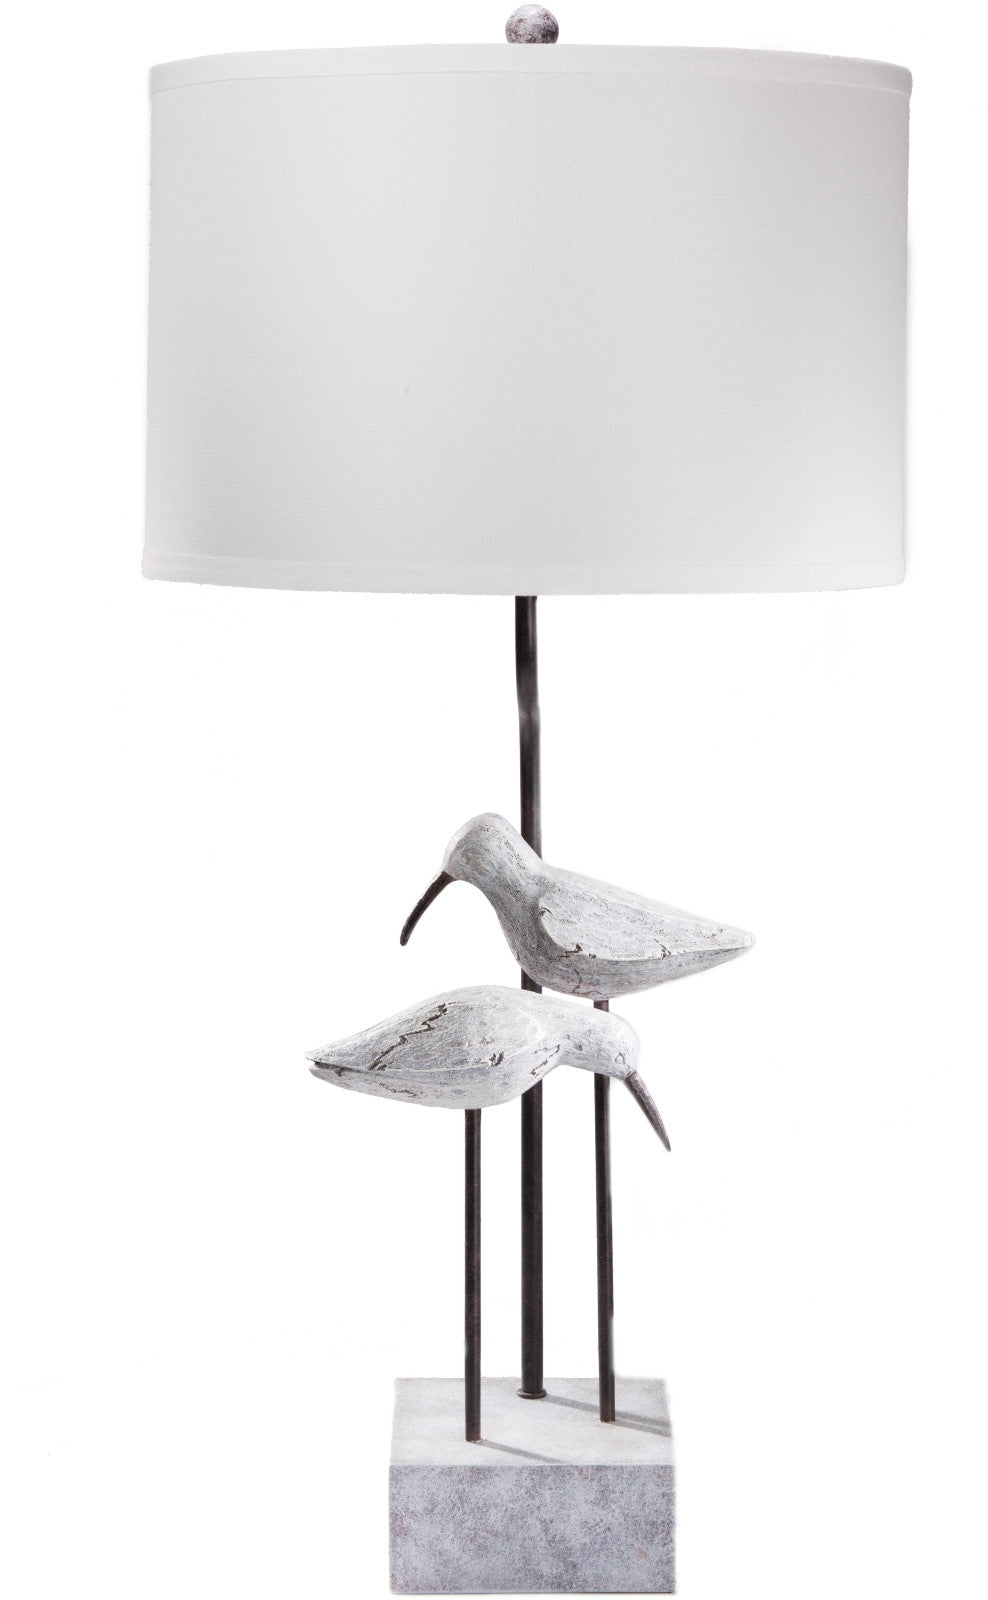 Surya Seagull SGLP-001 White Lamp Table Lamp